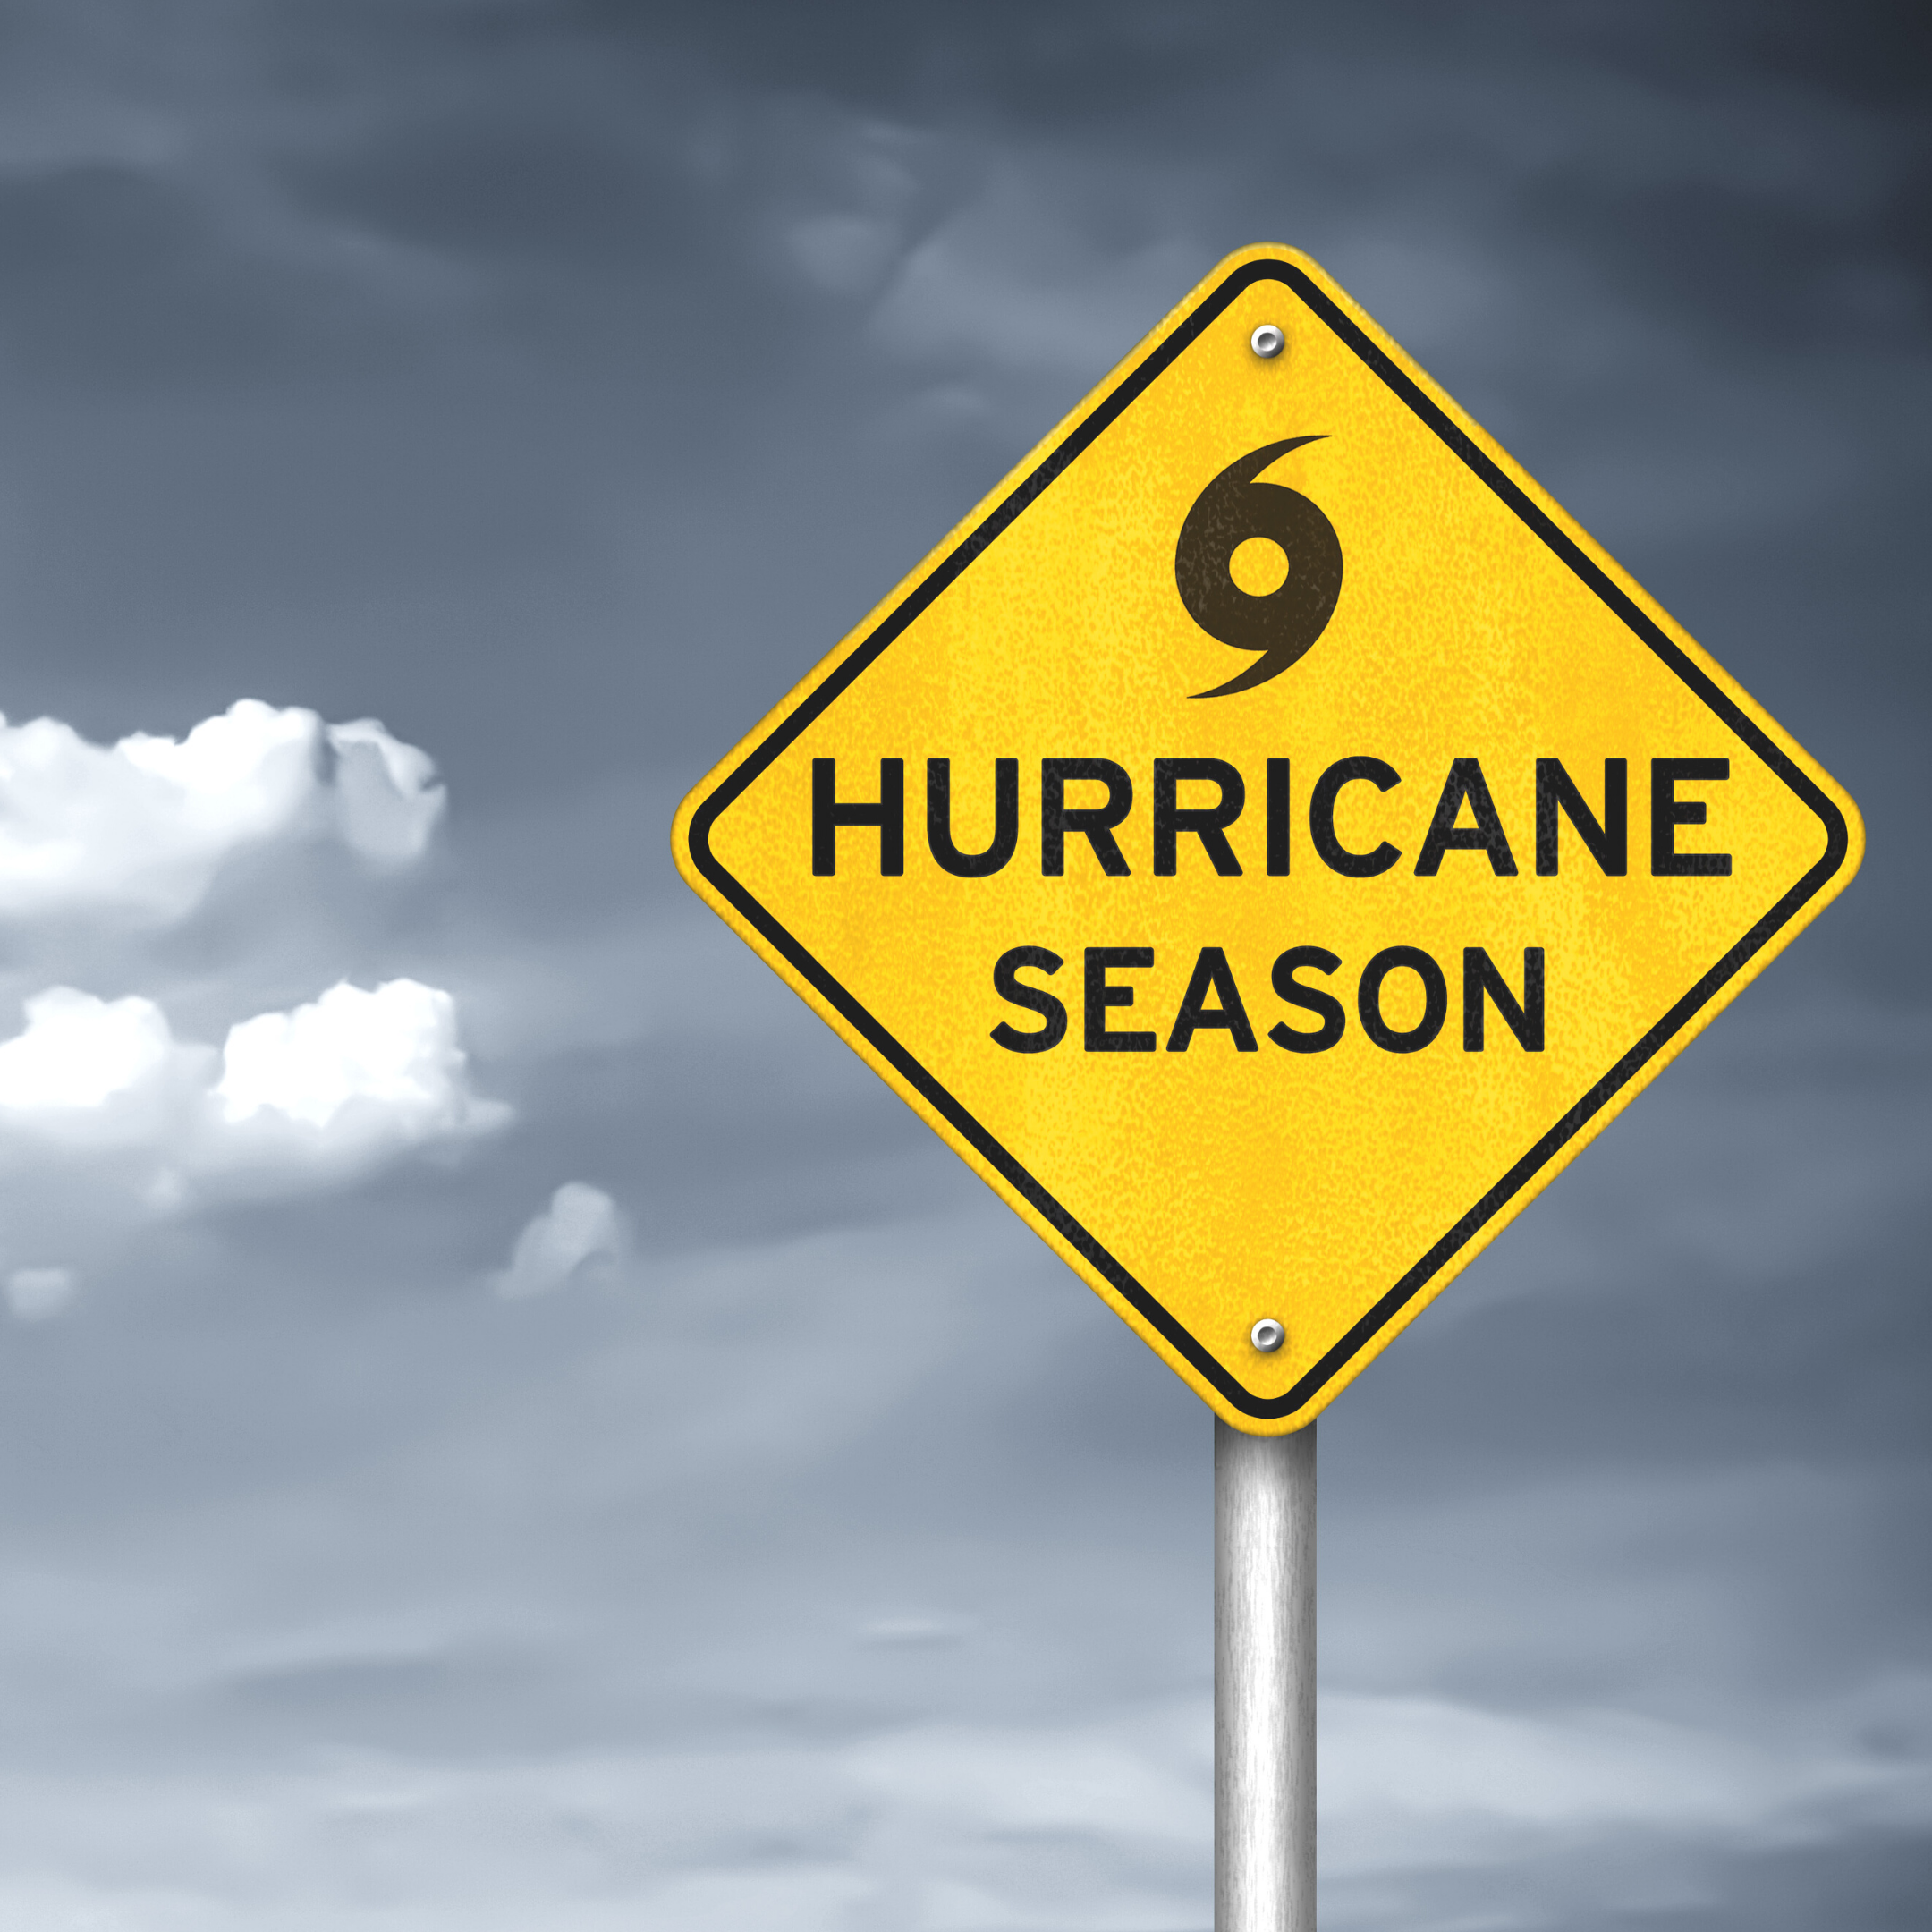 Hurricane Season Tips 